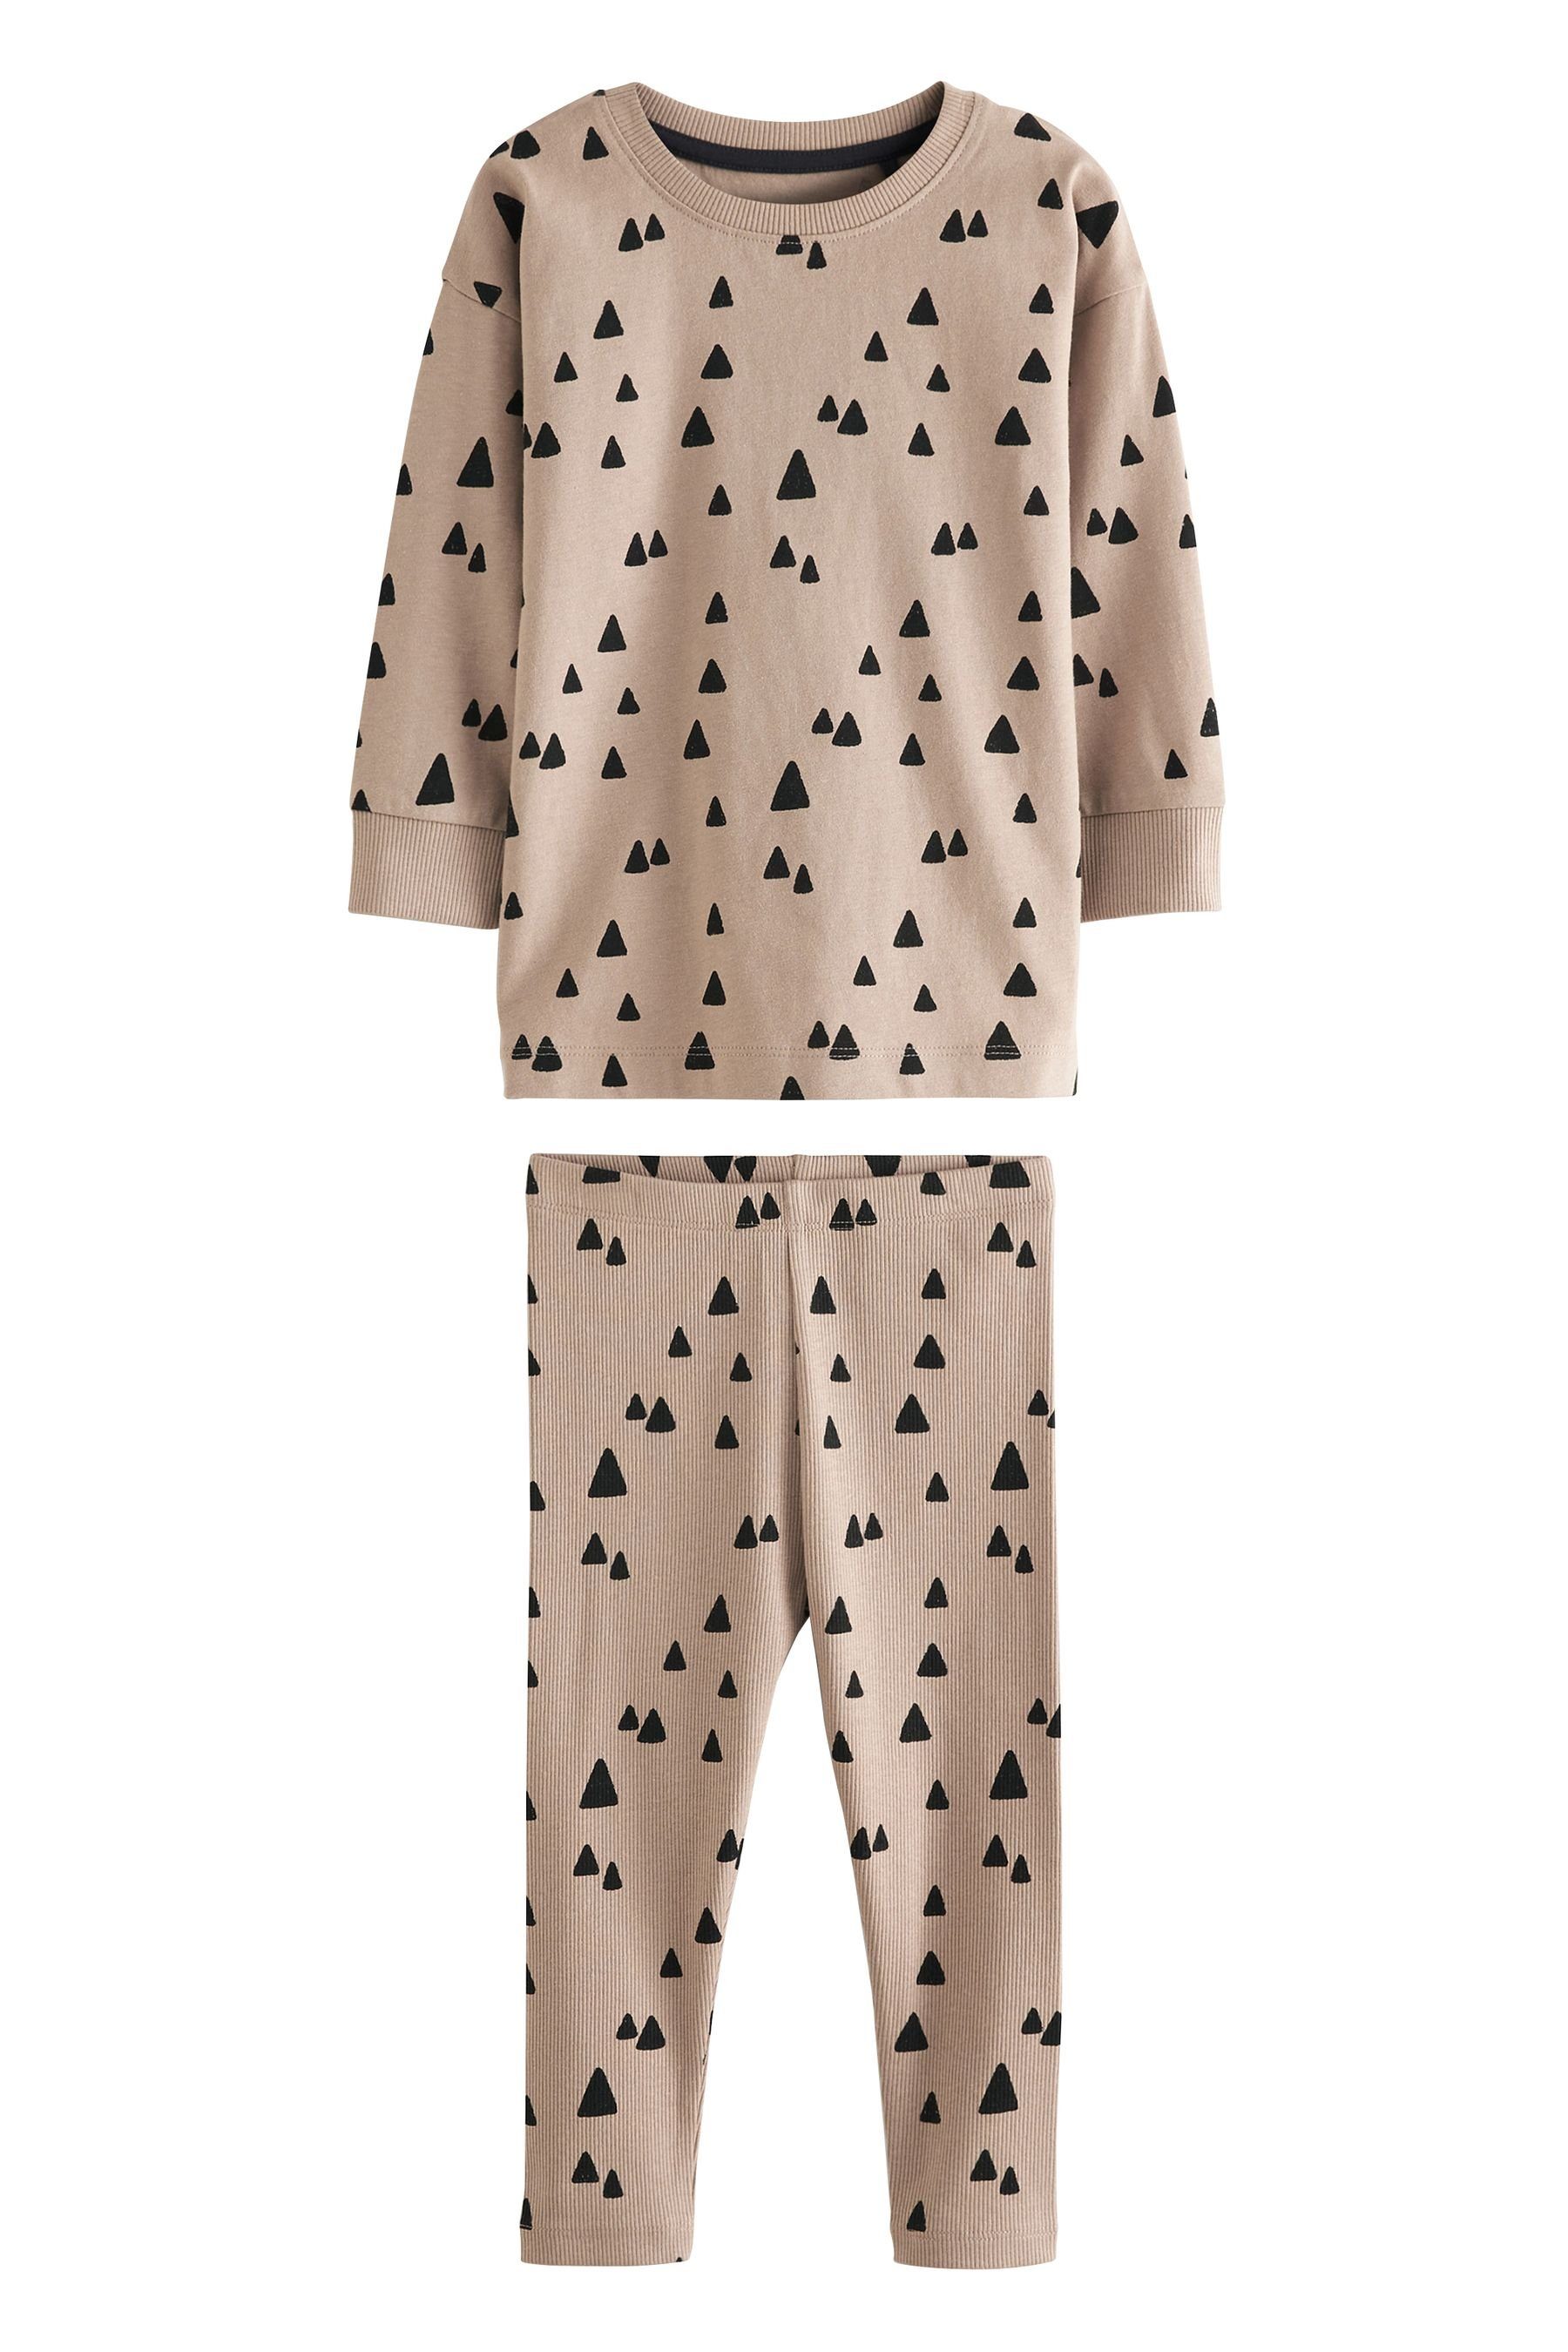 Next Pyjama Gerippter Snuggle Leggings-Pyjama, 3er-Pack Blue/Neutral (6 tlg) Mini Print